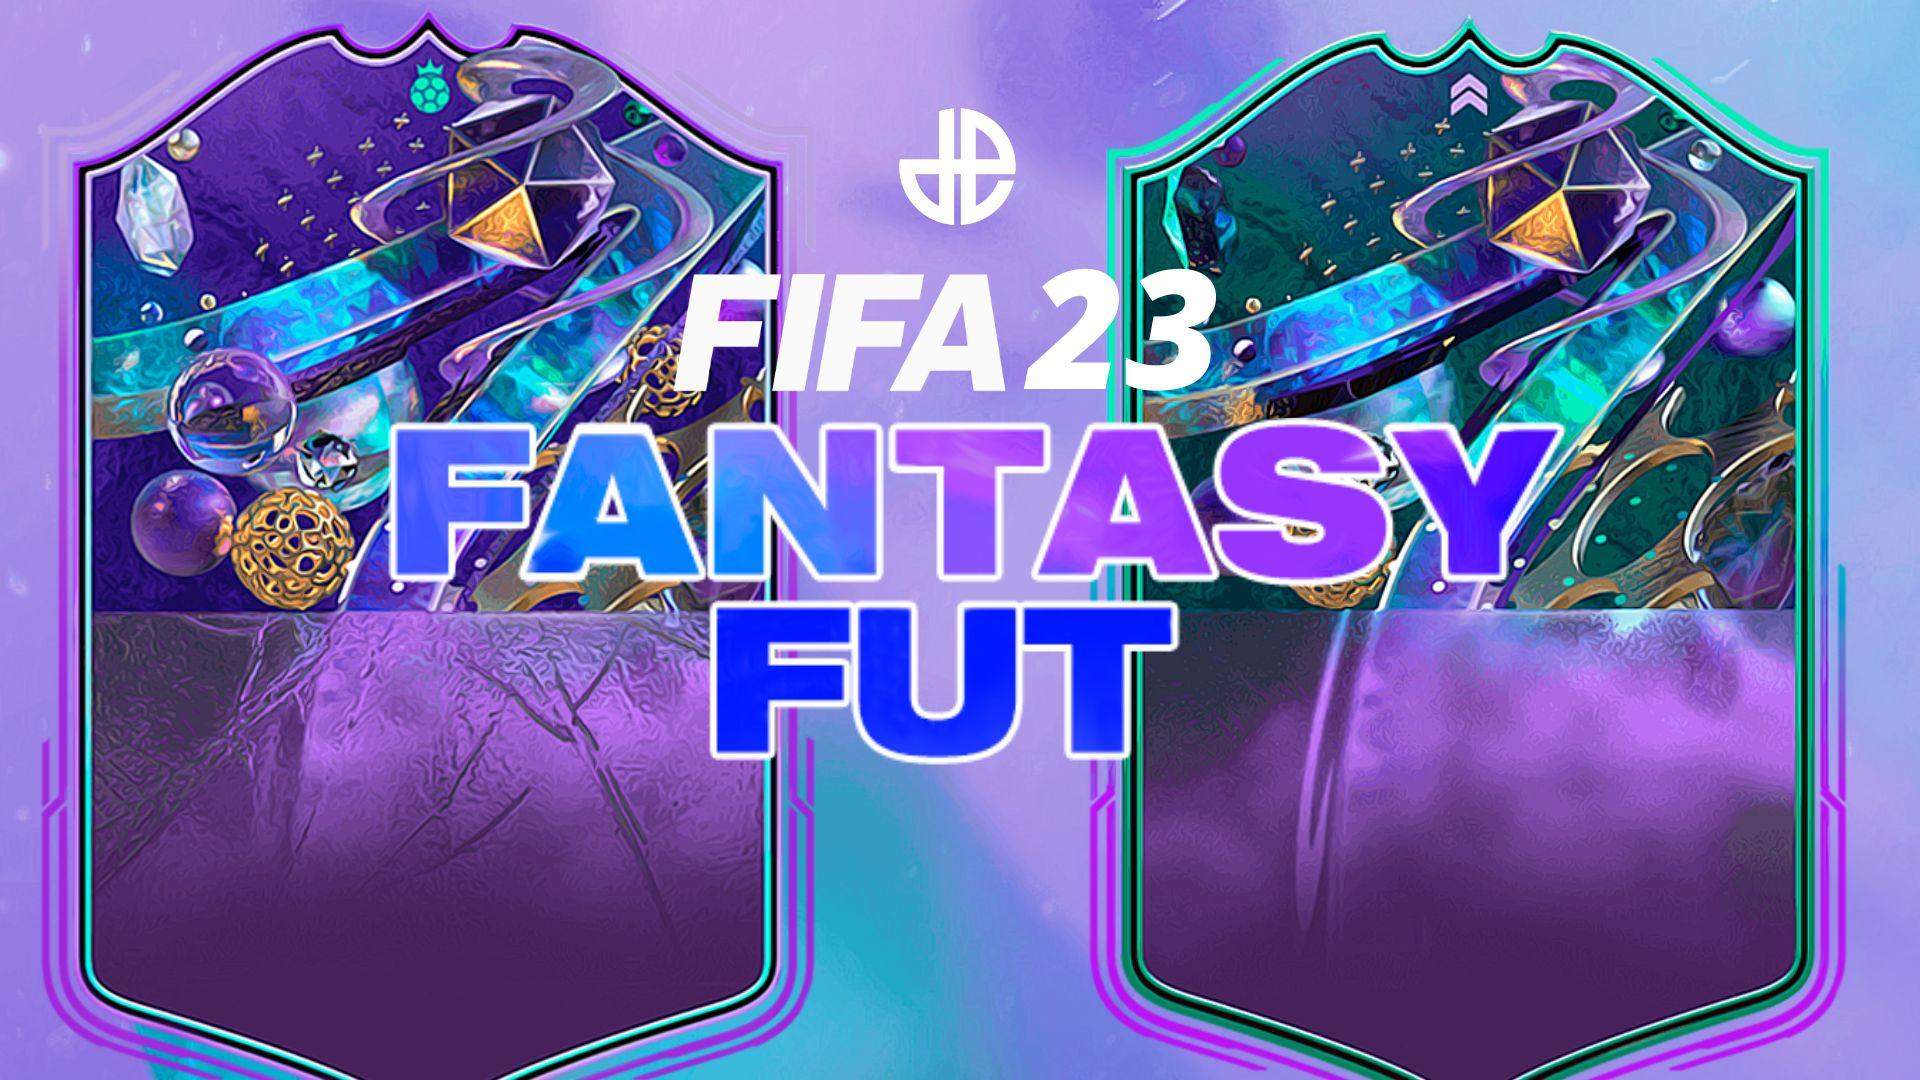 FIFA 23 Fantasy FUT logo and cards